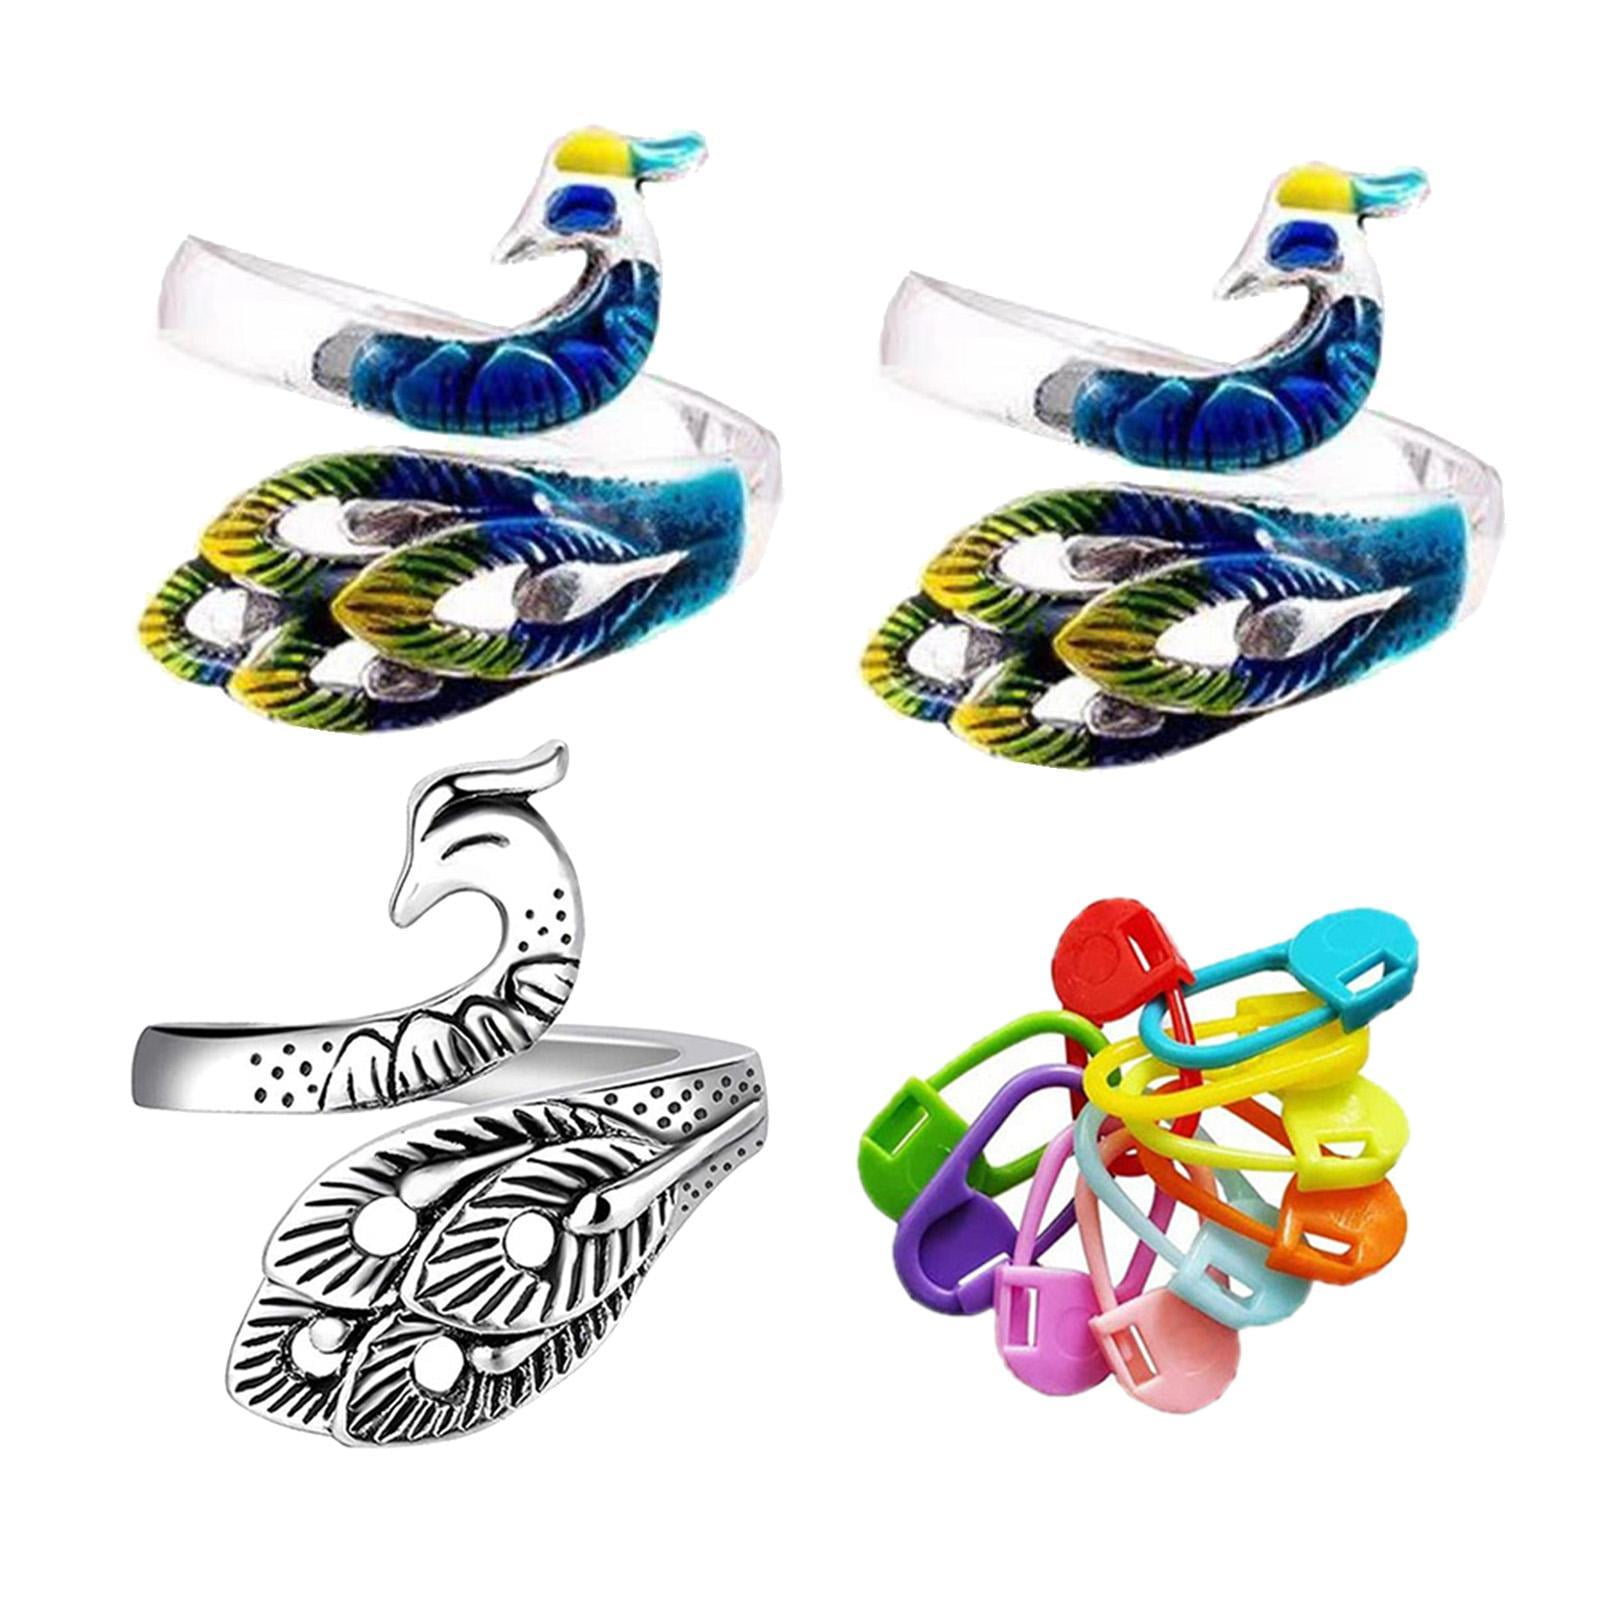 Toorise Crochet Kits for Beginners,Colorful Crochet Hook Set with  Storage,Accessories Ergonomic Crochet Kit,Starter Pack for Kids Adults,  Beginner,Professionals(Swan Lake) 